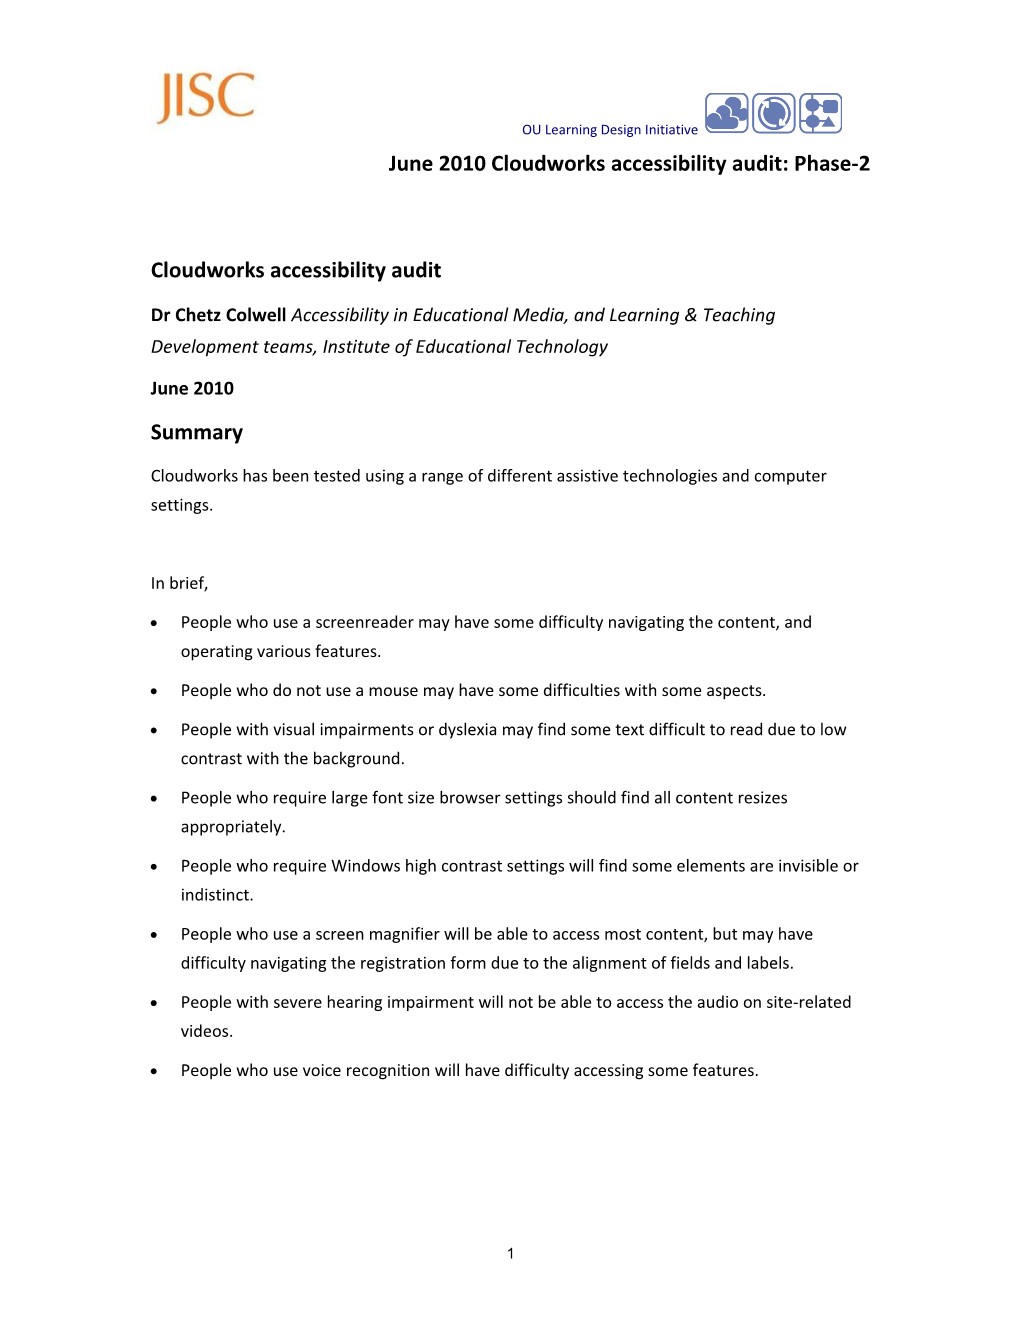 June 2010 Cloudworks Accessibility Audit: Phase-2